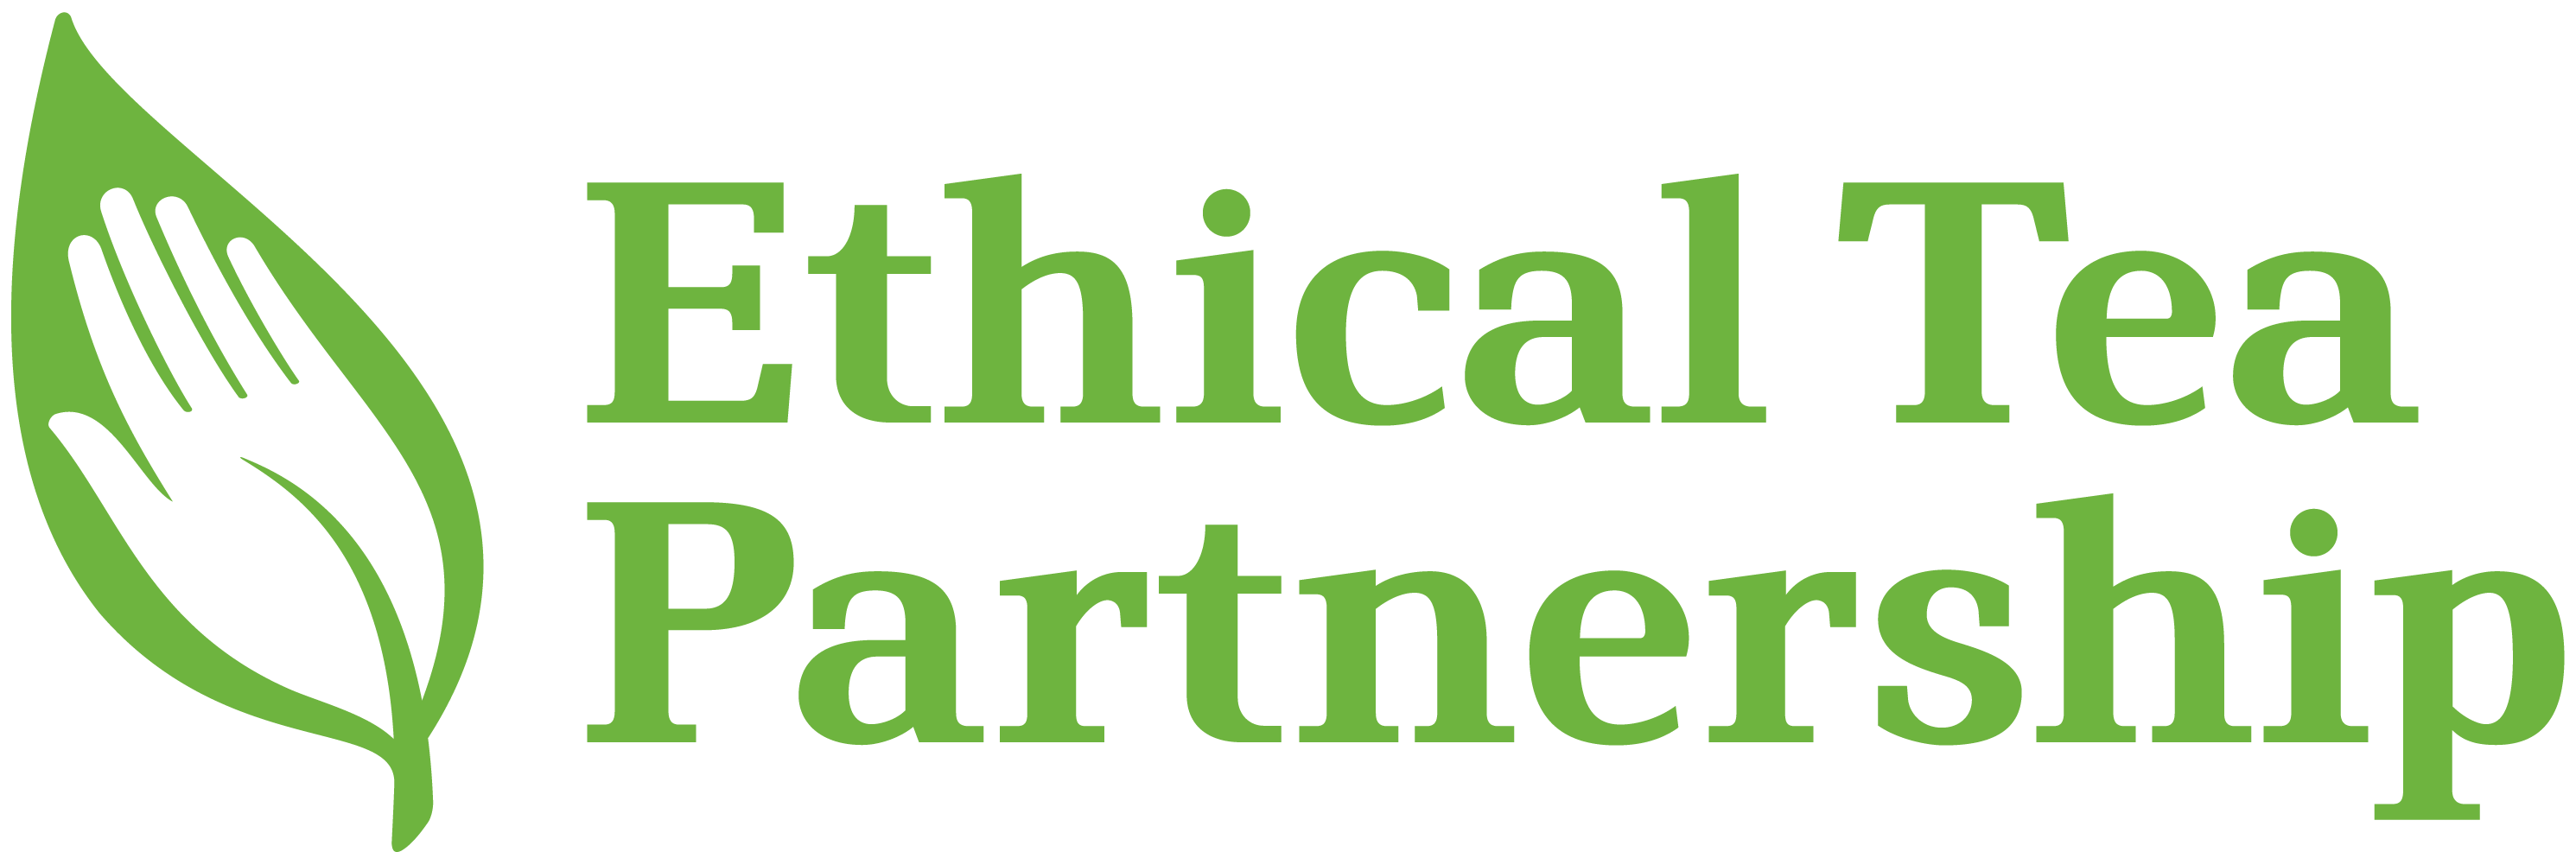 logo for Ethical Tea Partnership